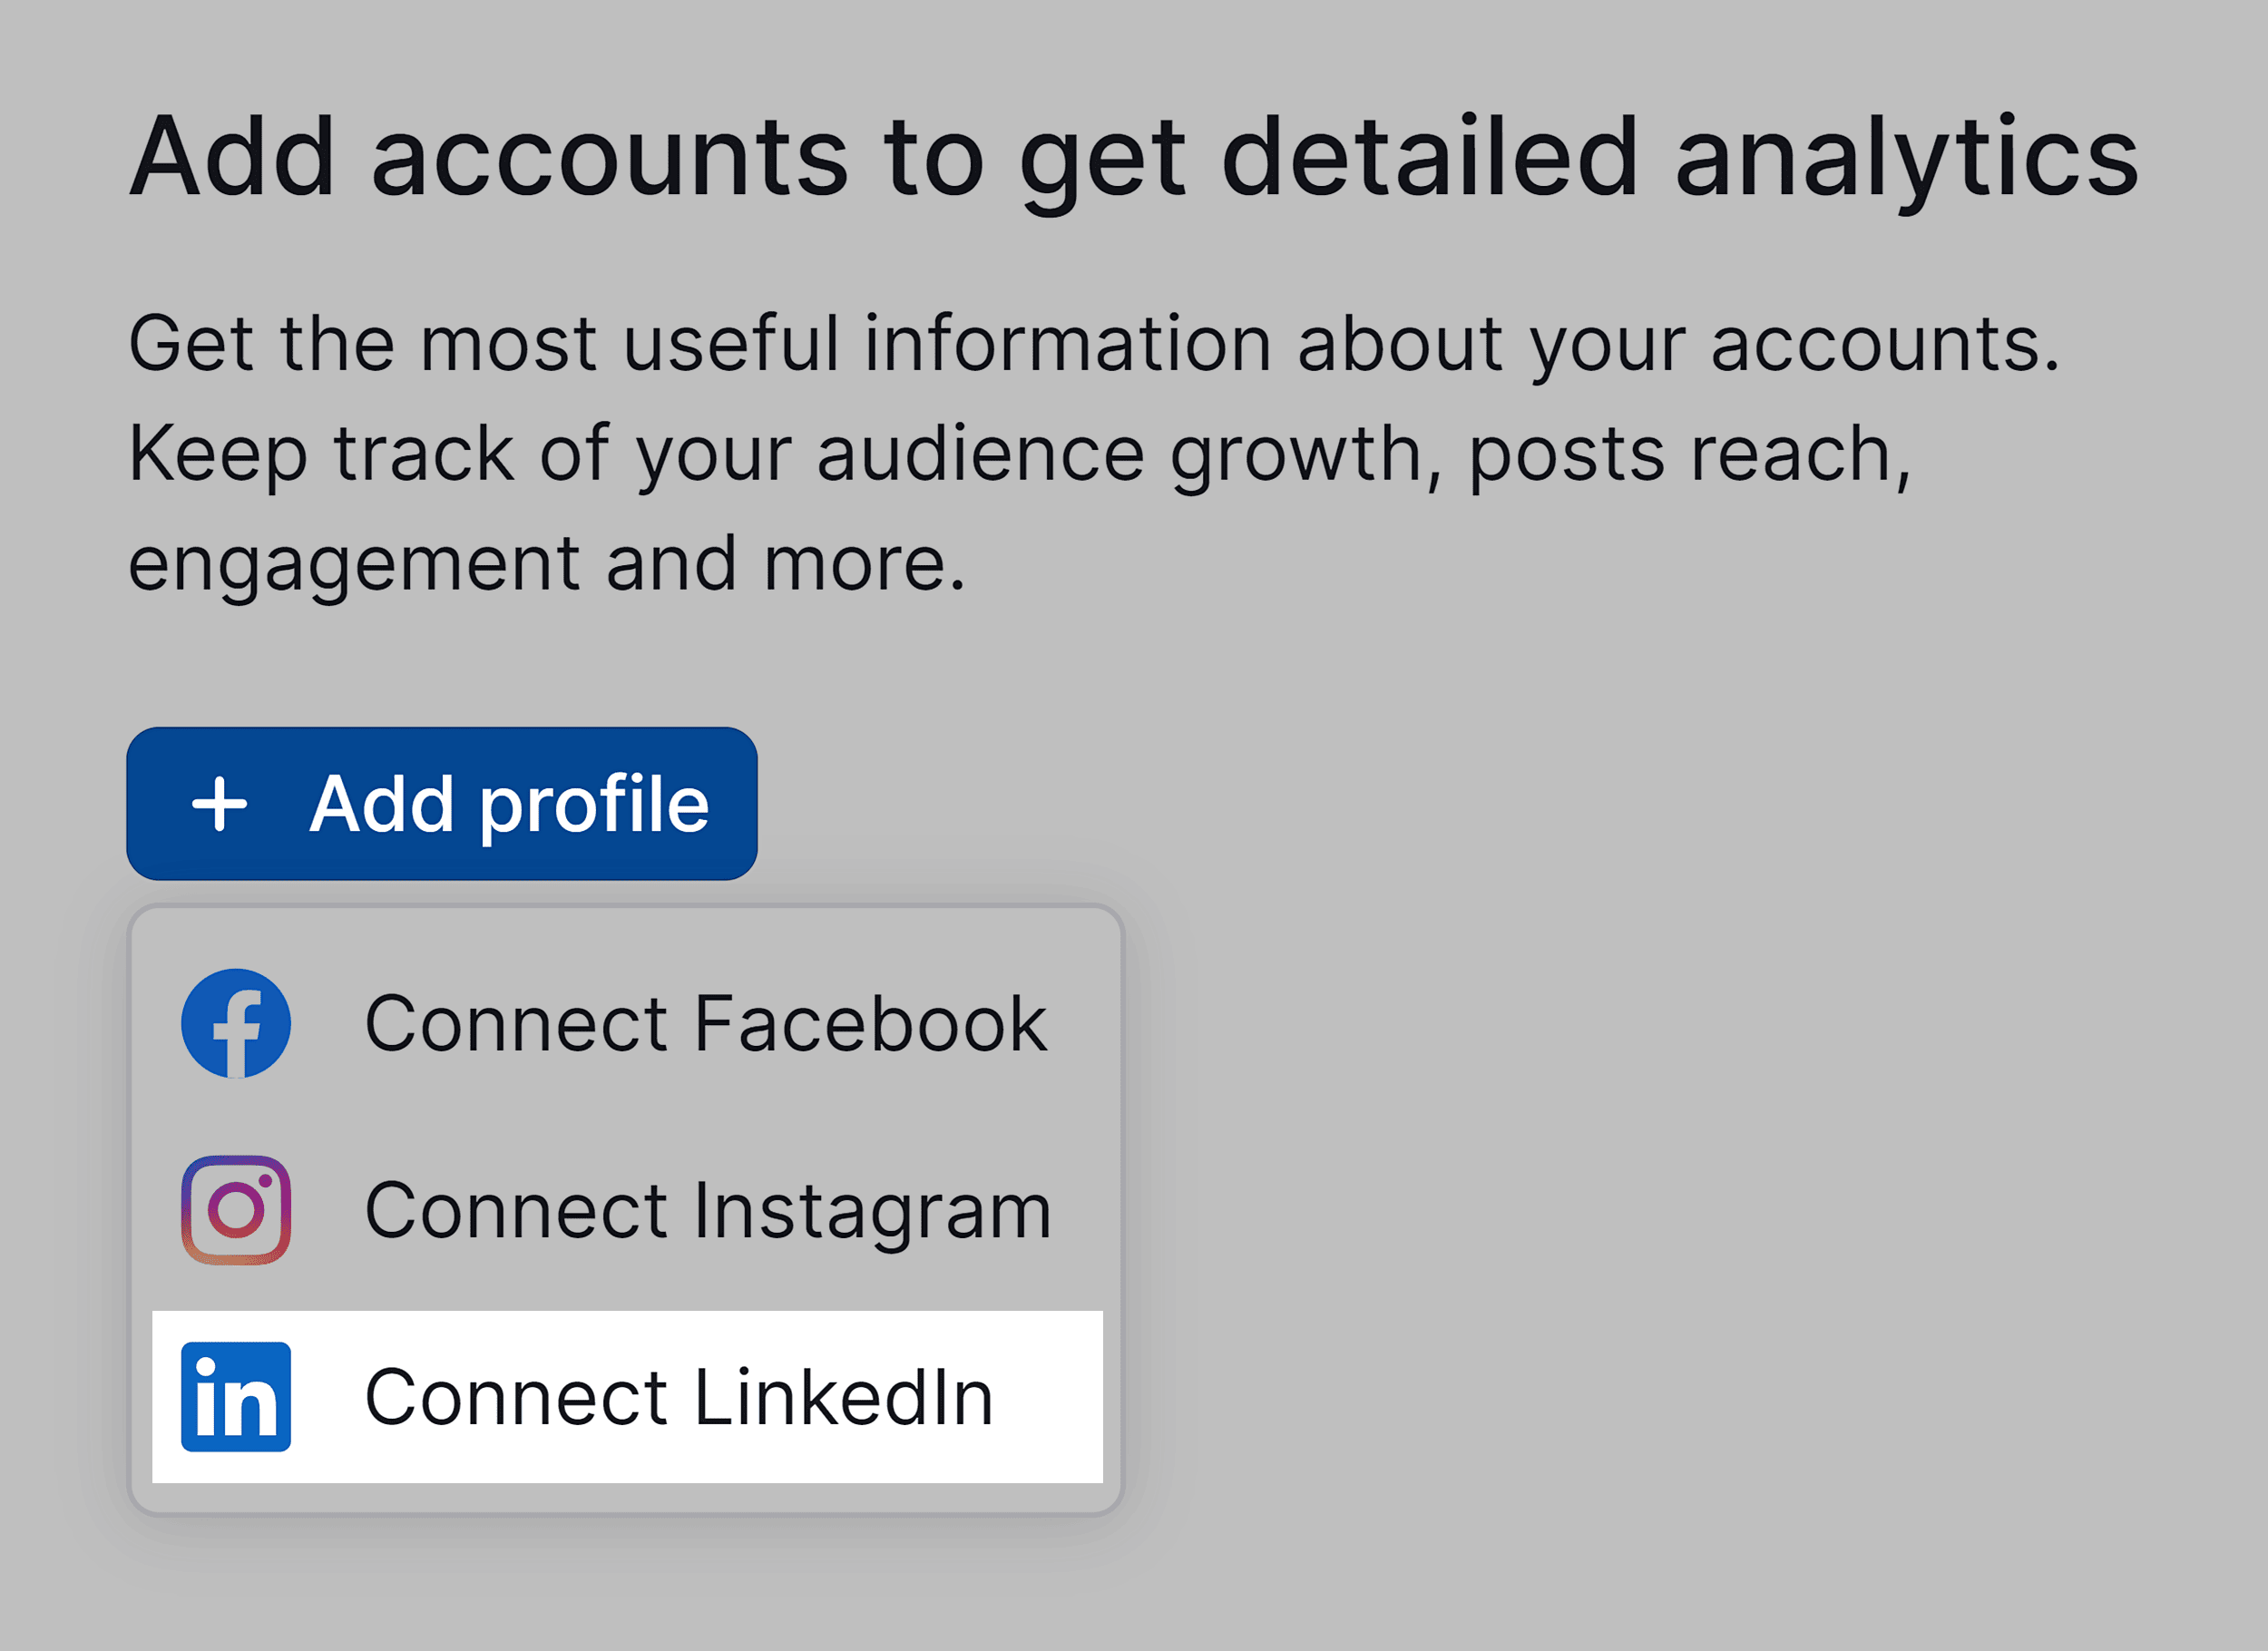 Social Analytics – Connect LinkedIn